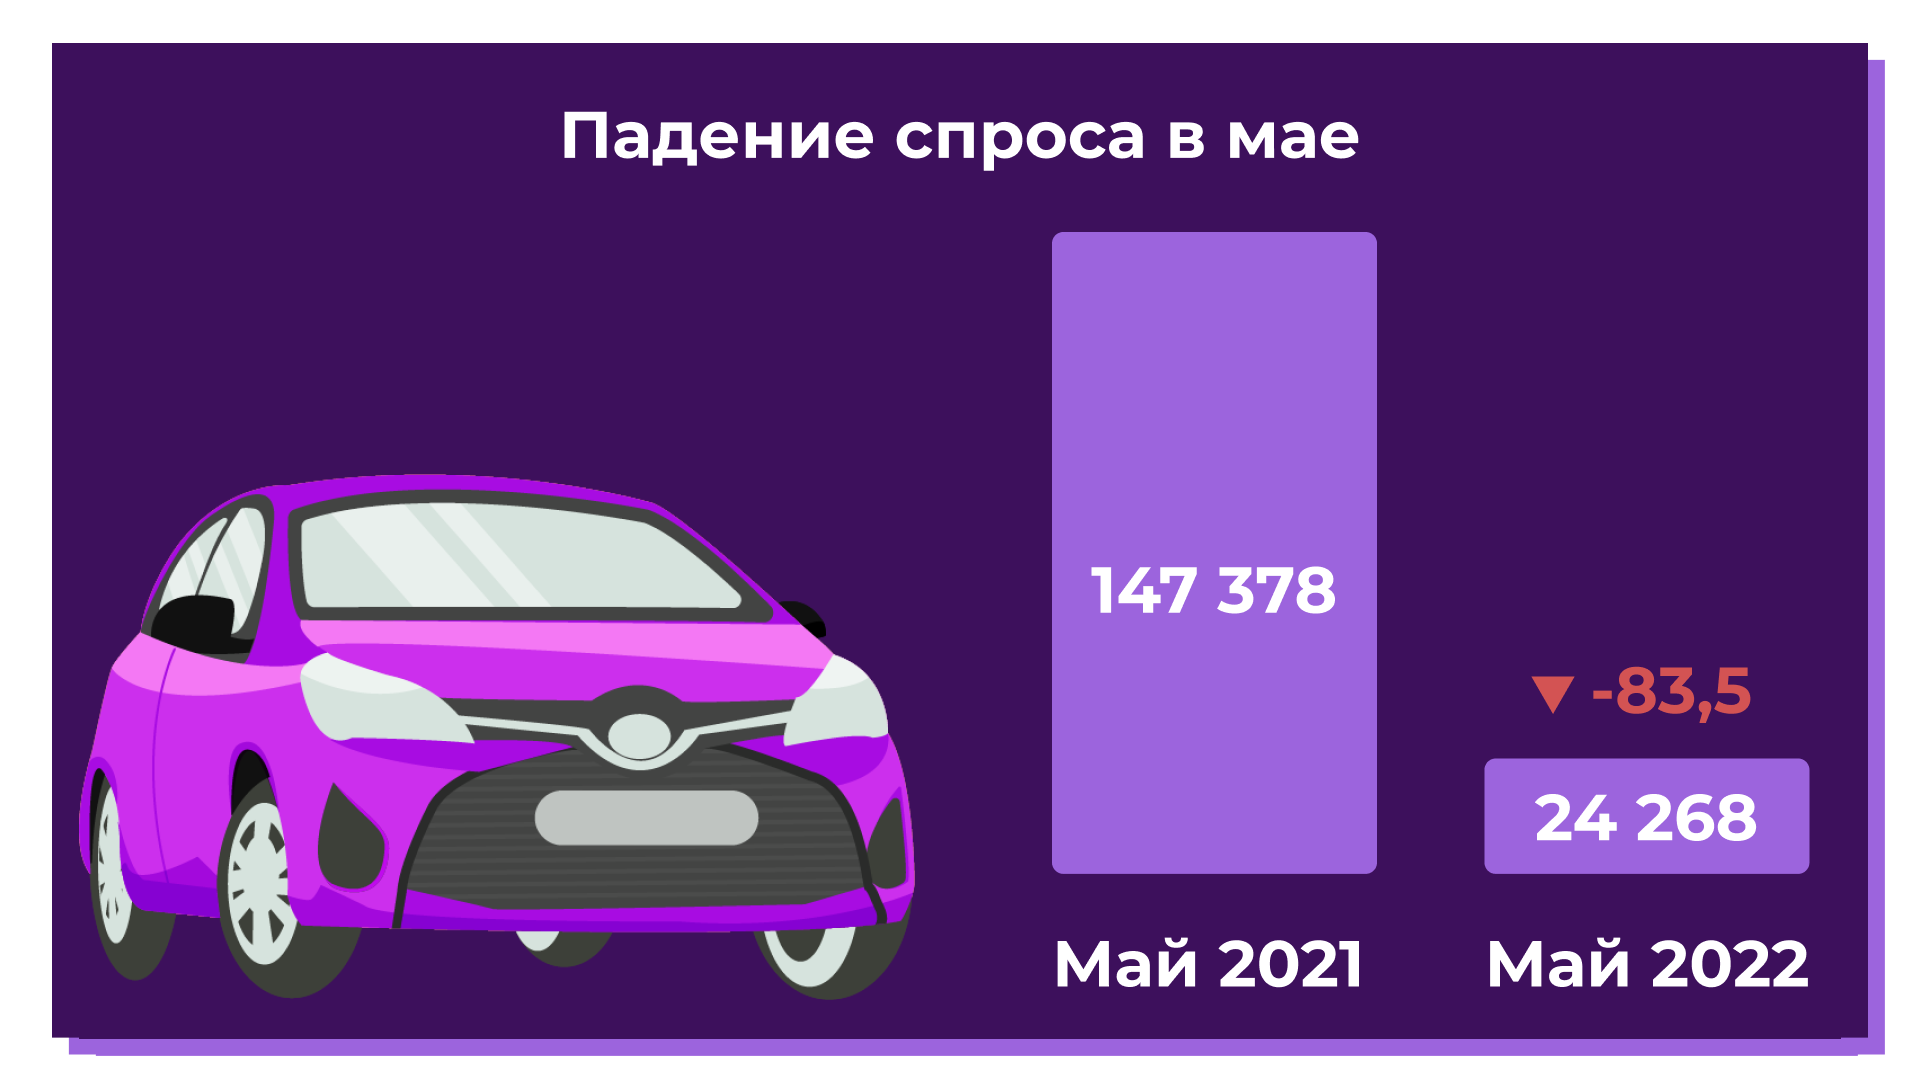 Падение спроса на автомобили в мае 2022 года